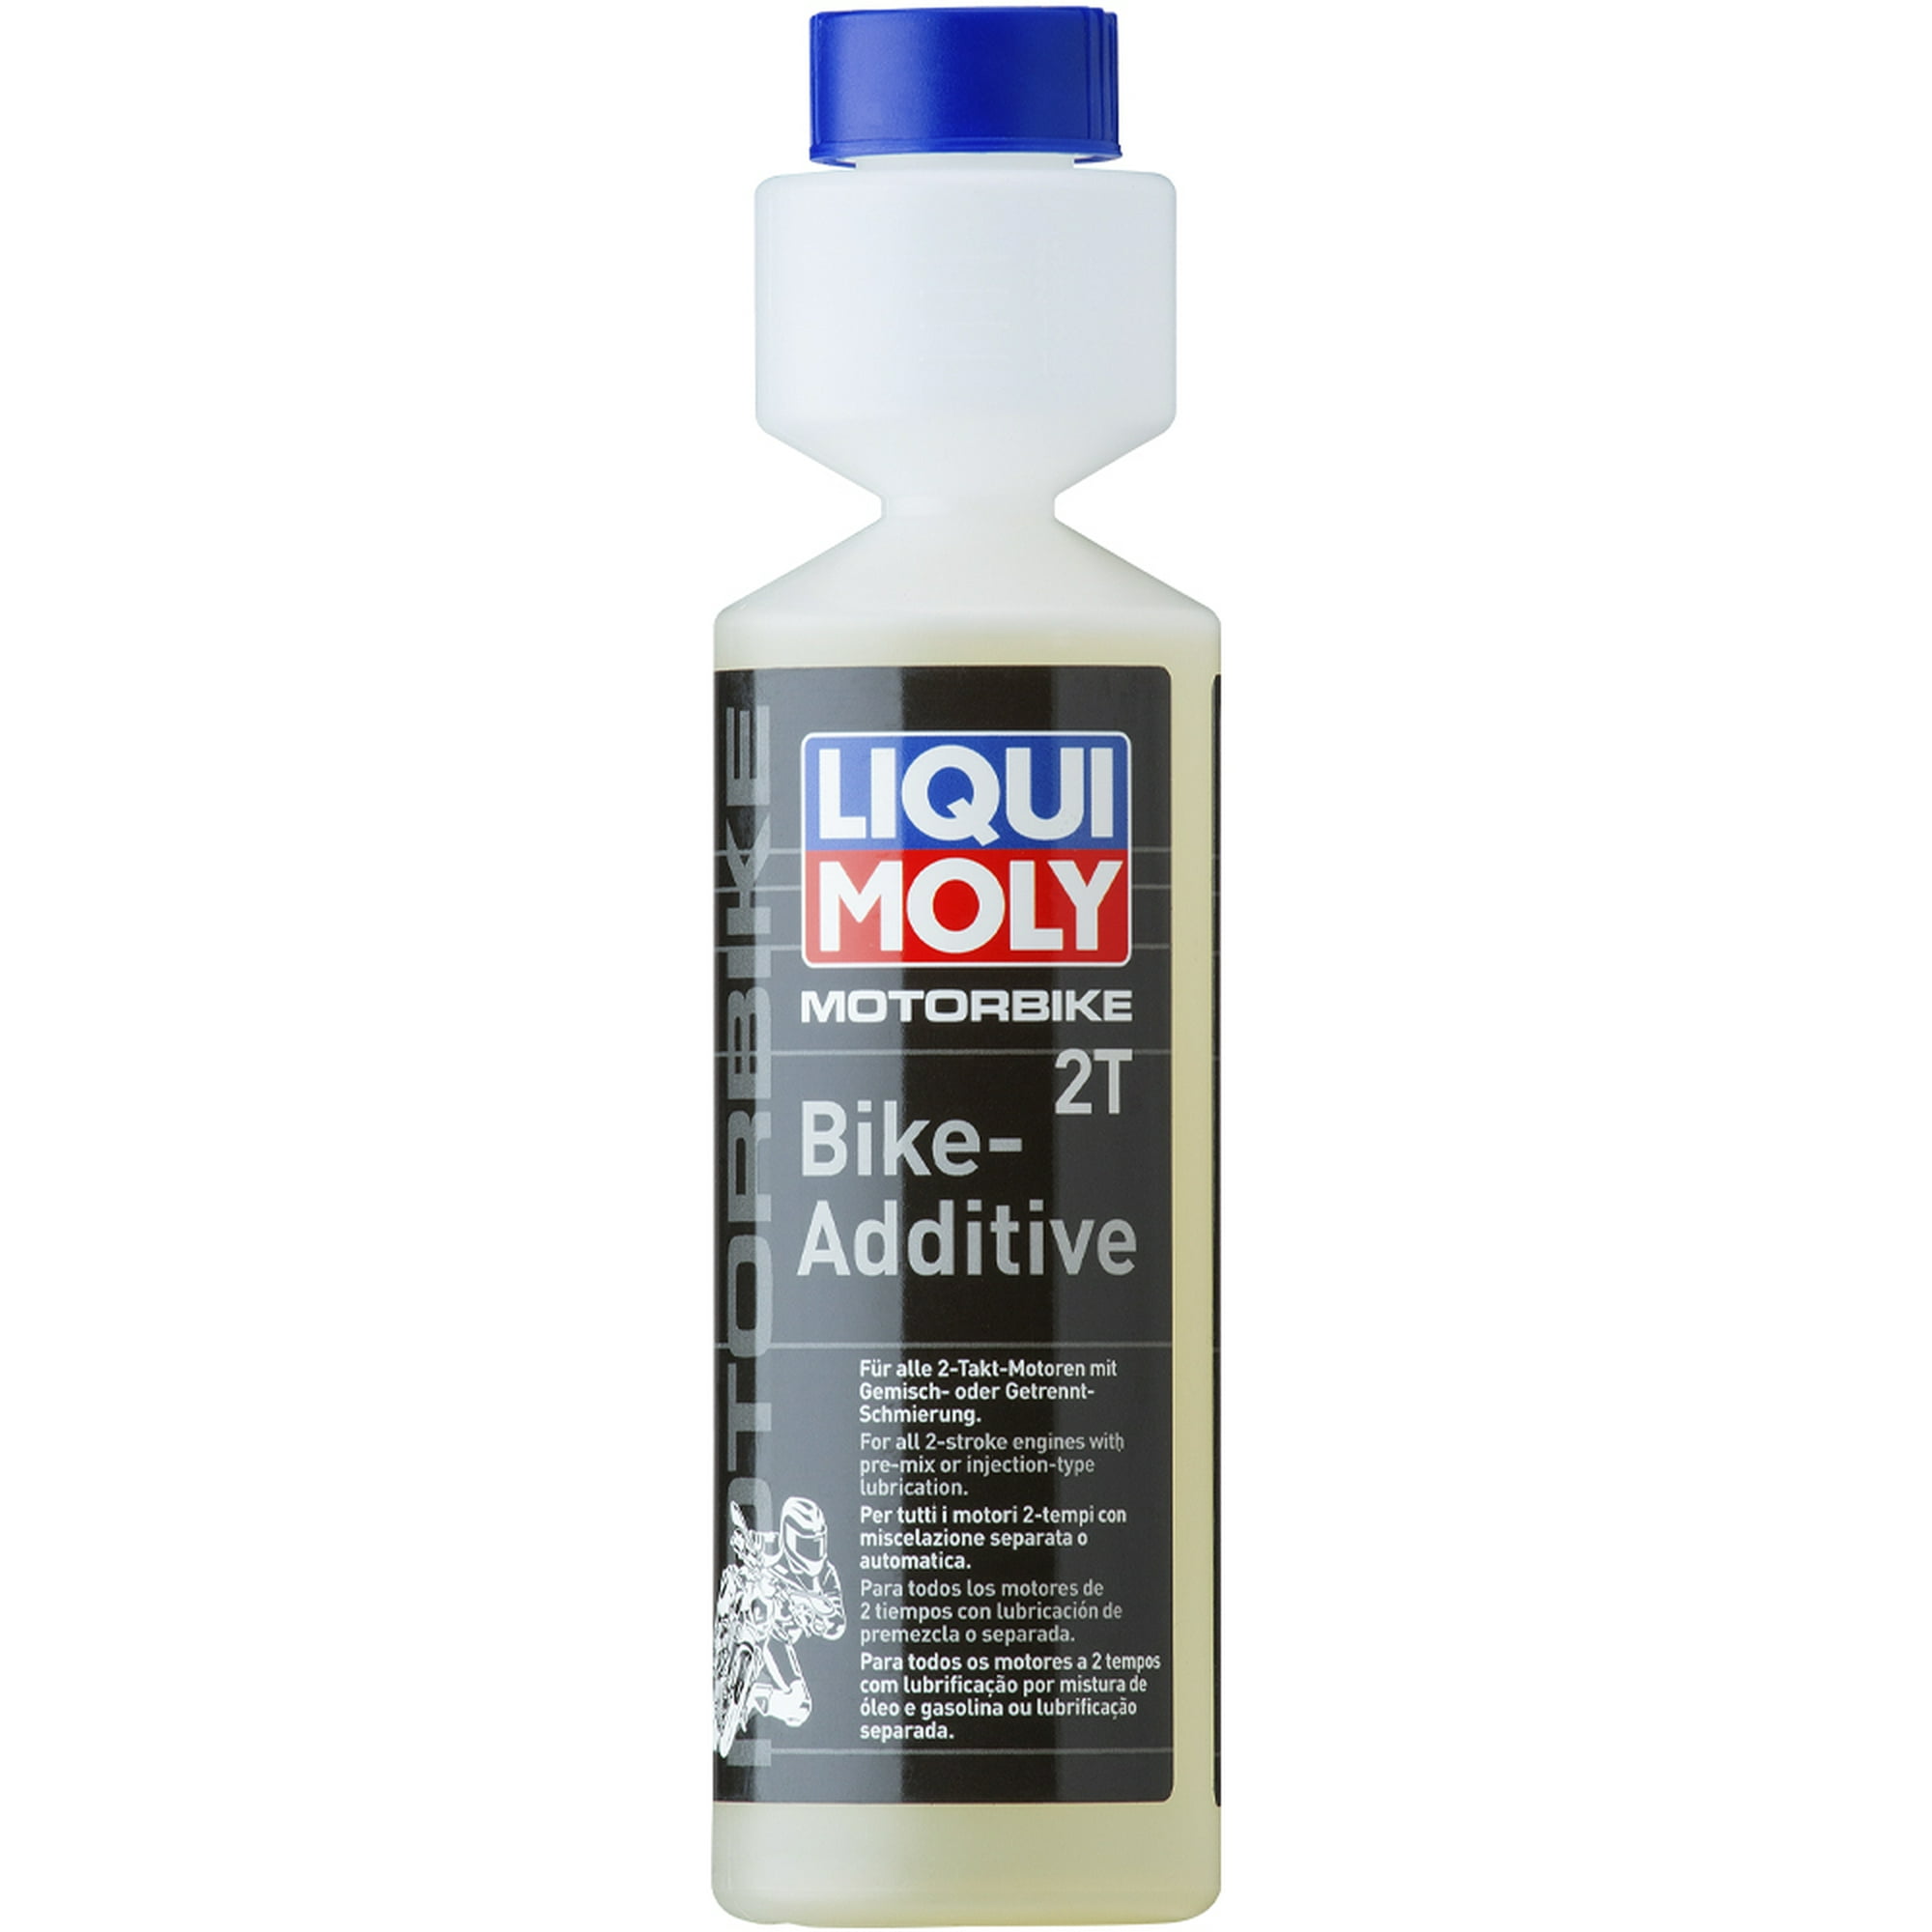 Paquete Liqui Moly Ceratec, Inyection Reiniger Y Oil Aditiv